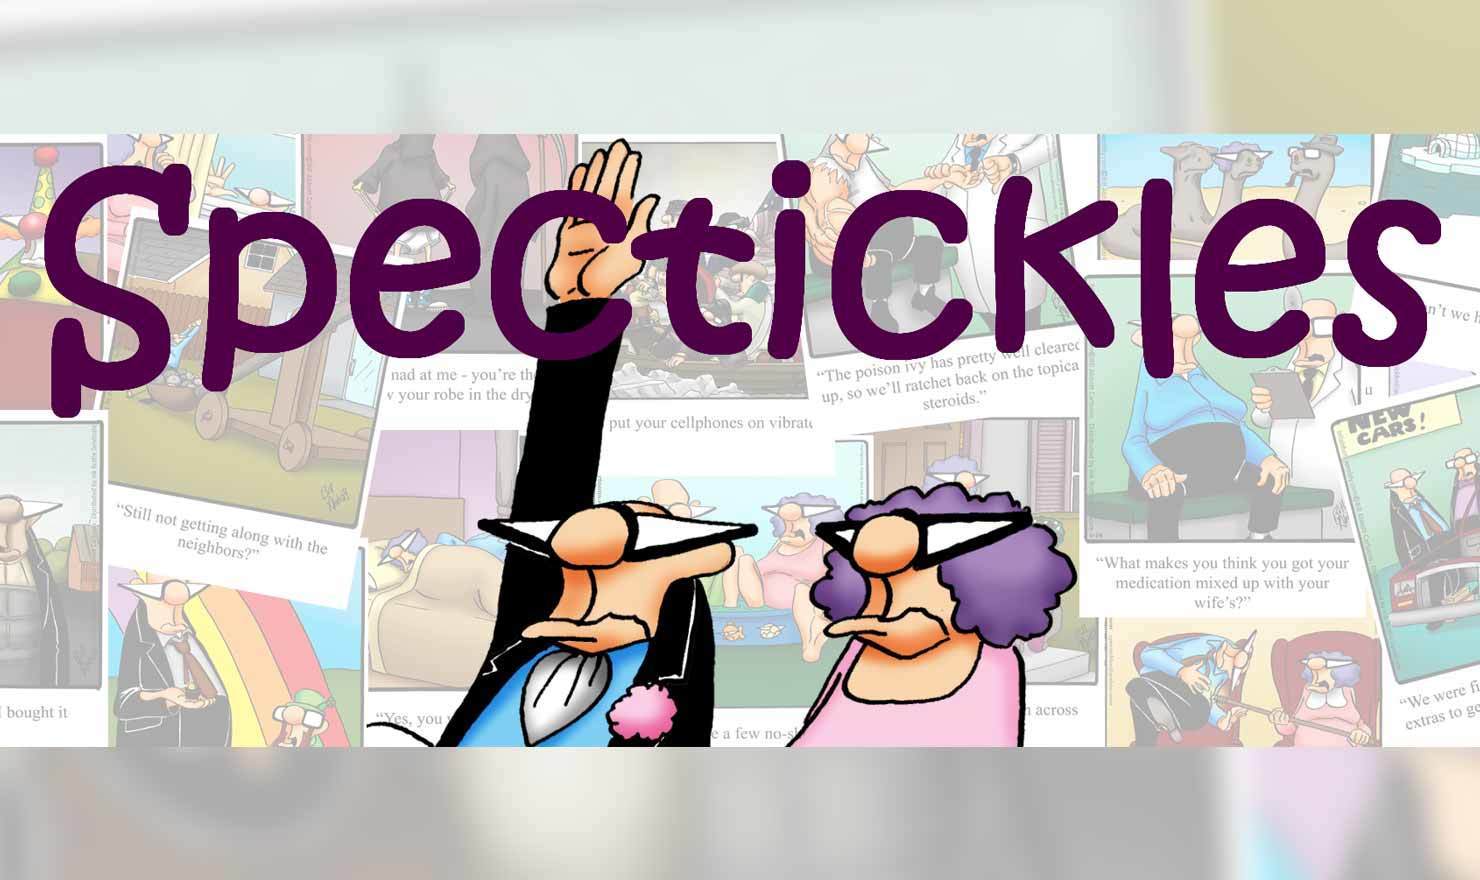 New Comic Alert: 'Spectickles' By Bill Abbott